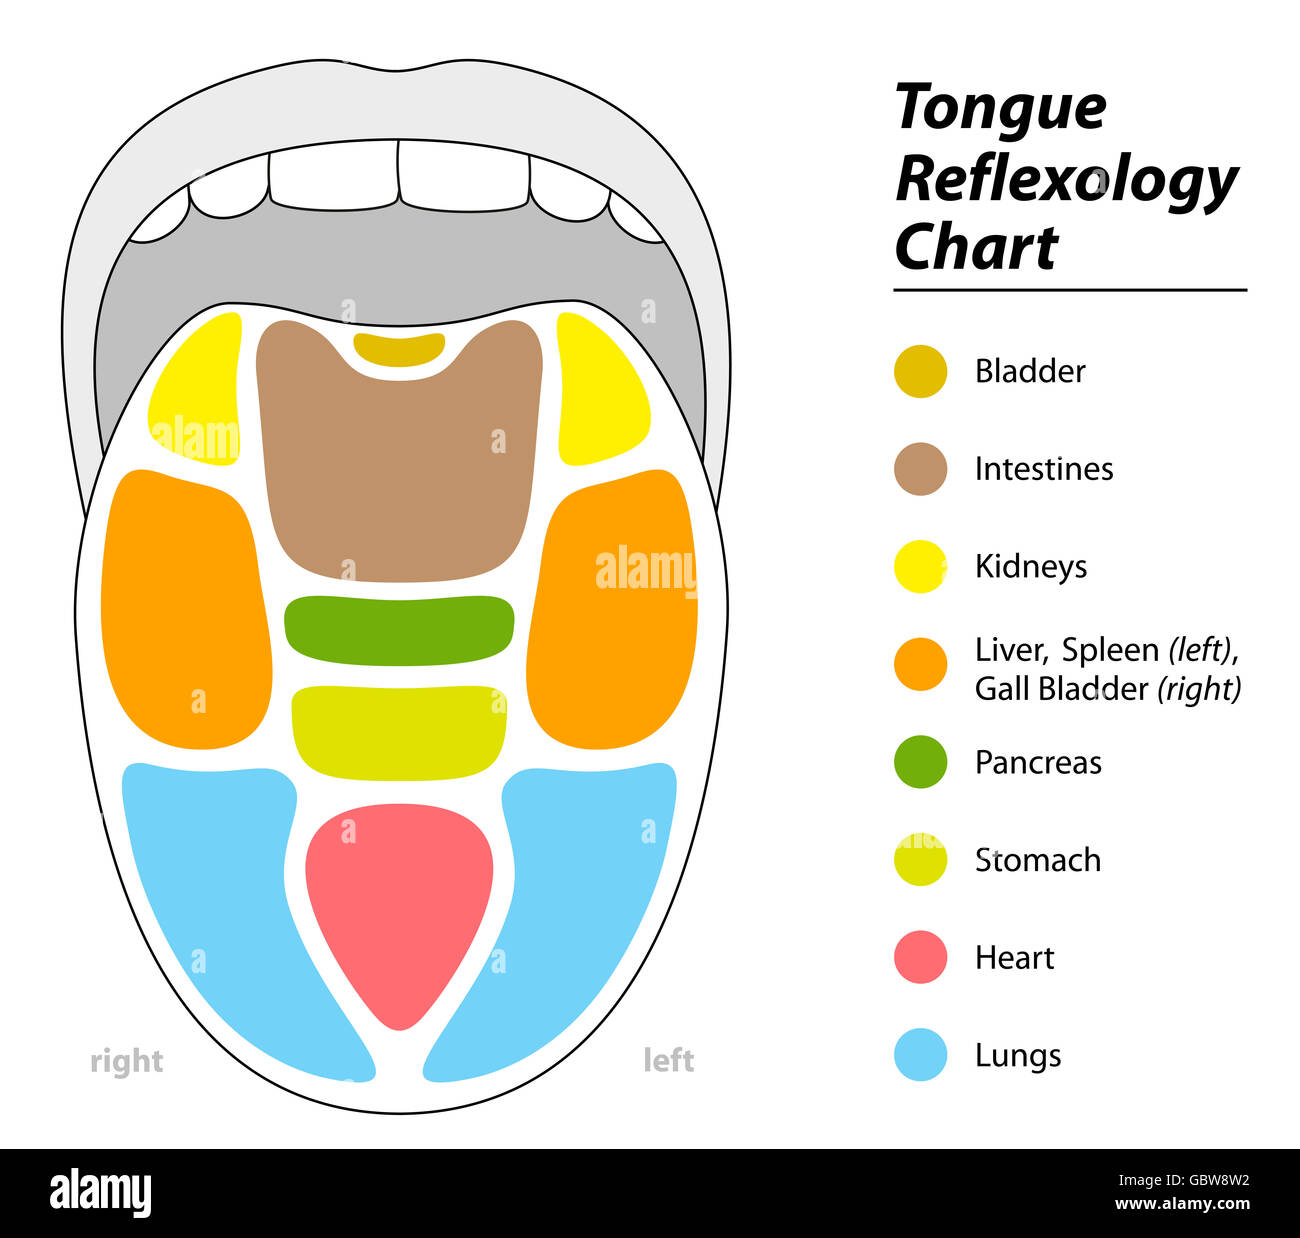 Tongue diagnosis chart with reflexology areas of the corresponding internal organs. Stock Photo